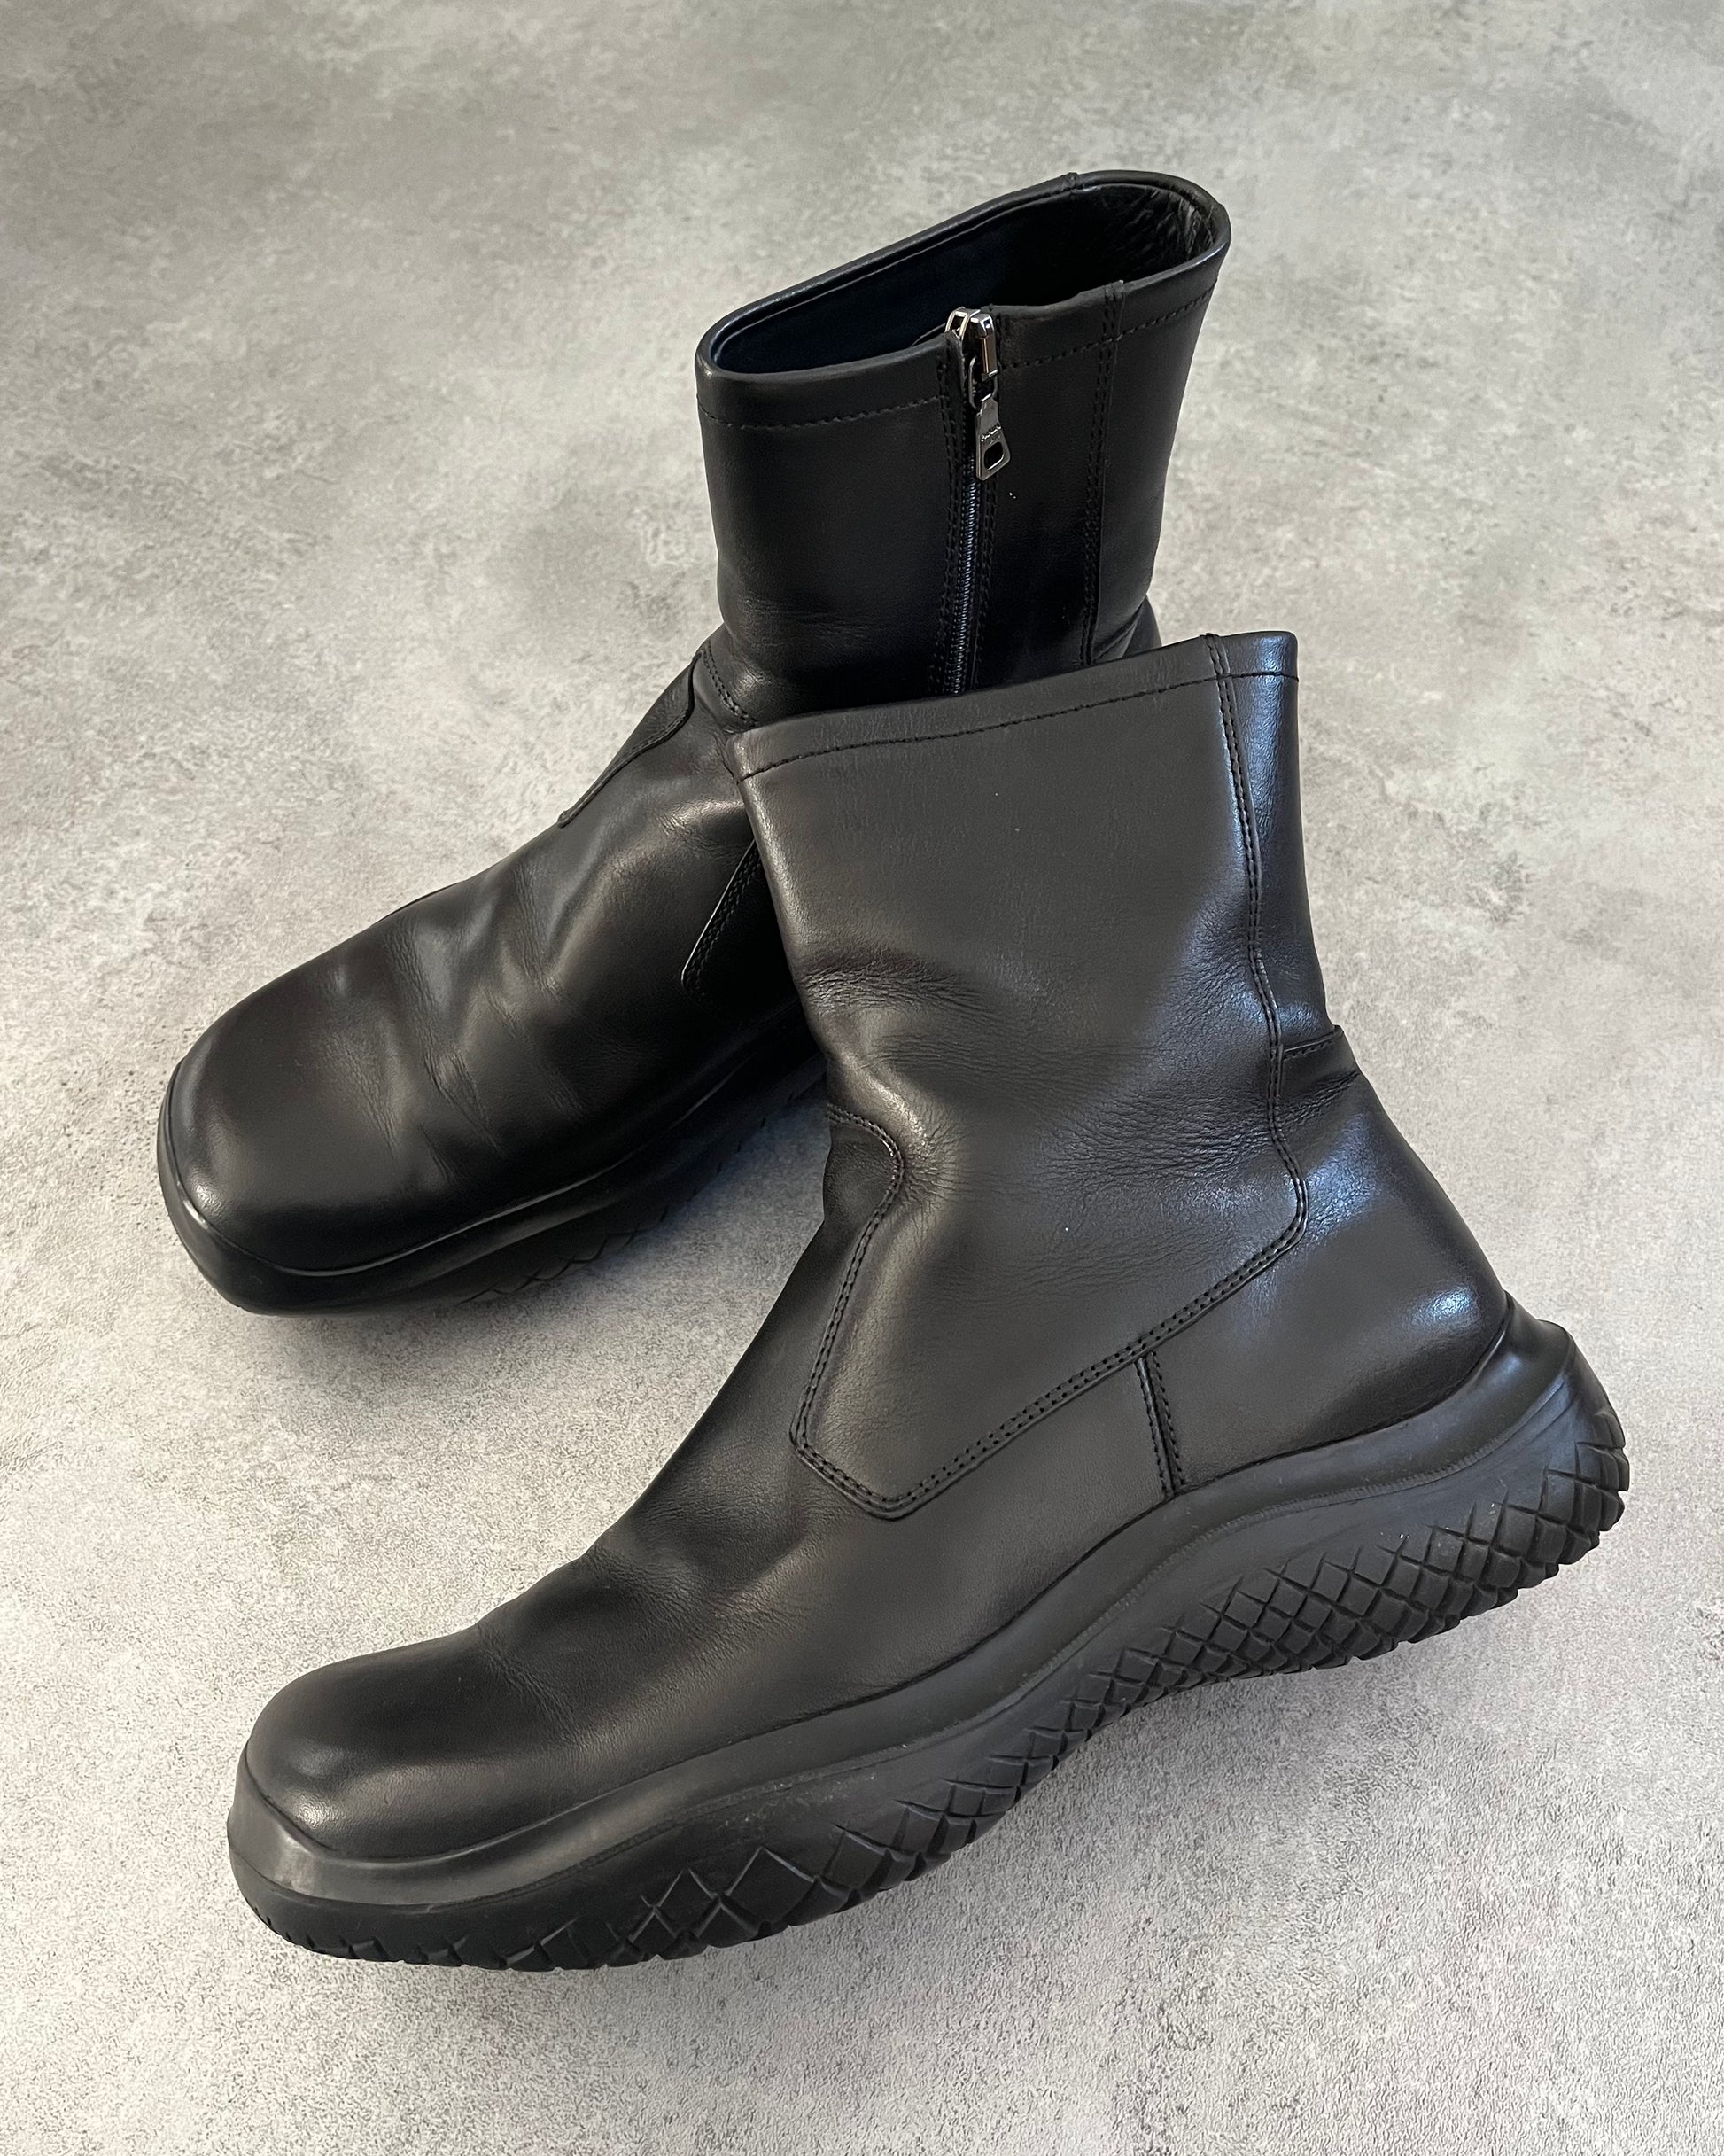 FW1999 Prada Ankle Vibram Leather Boots (40.5eu/us7.5) (40.5) - 3